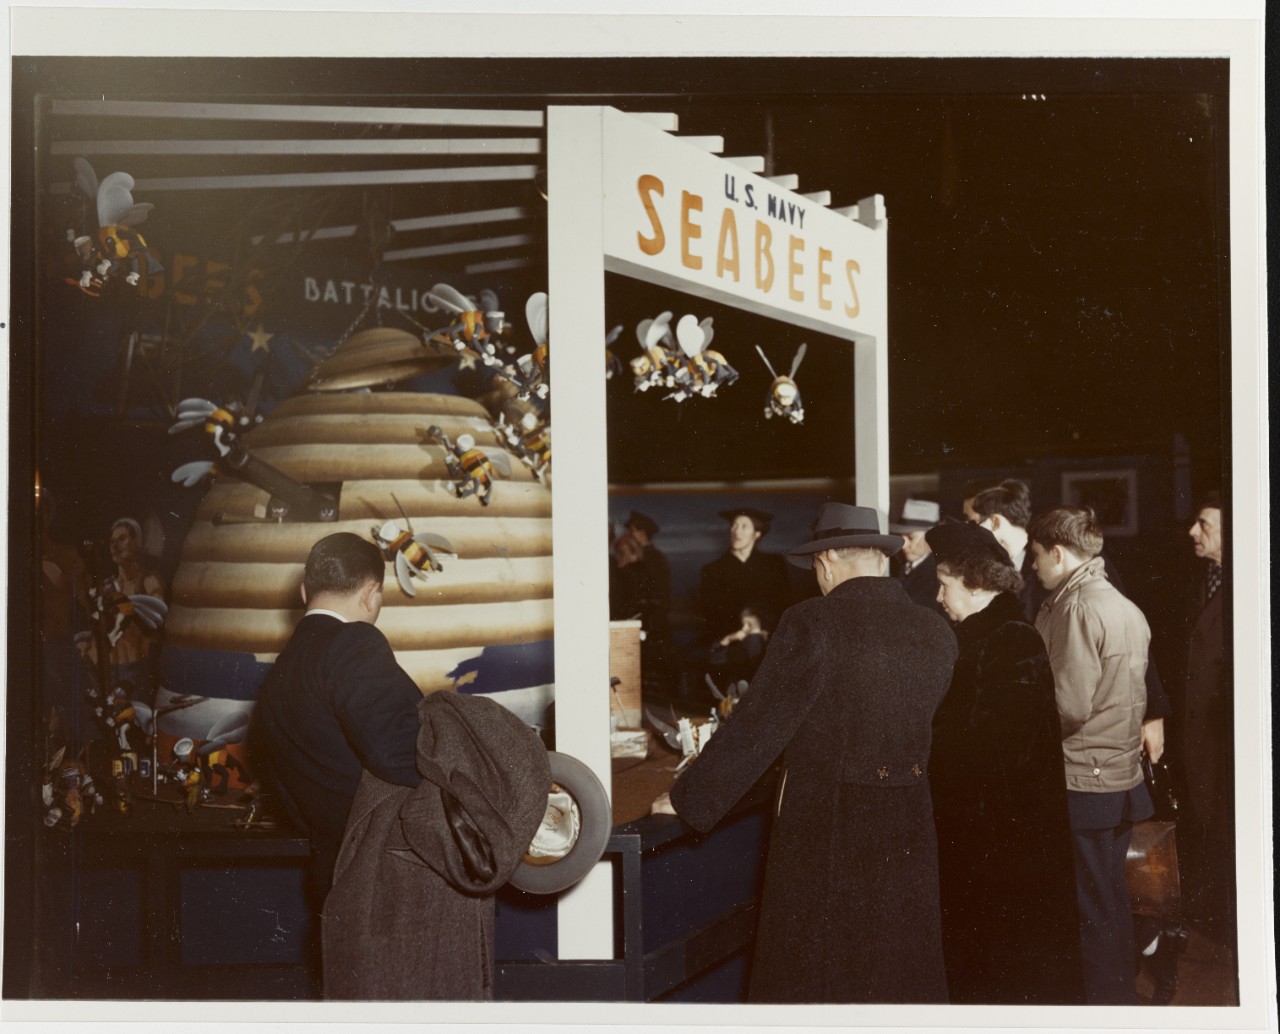 U.S. Navy 6th War Loan Exhibition, Chicago, Illinois, December 1944